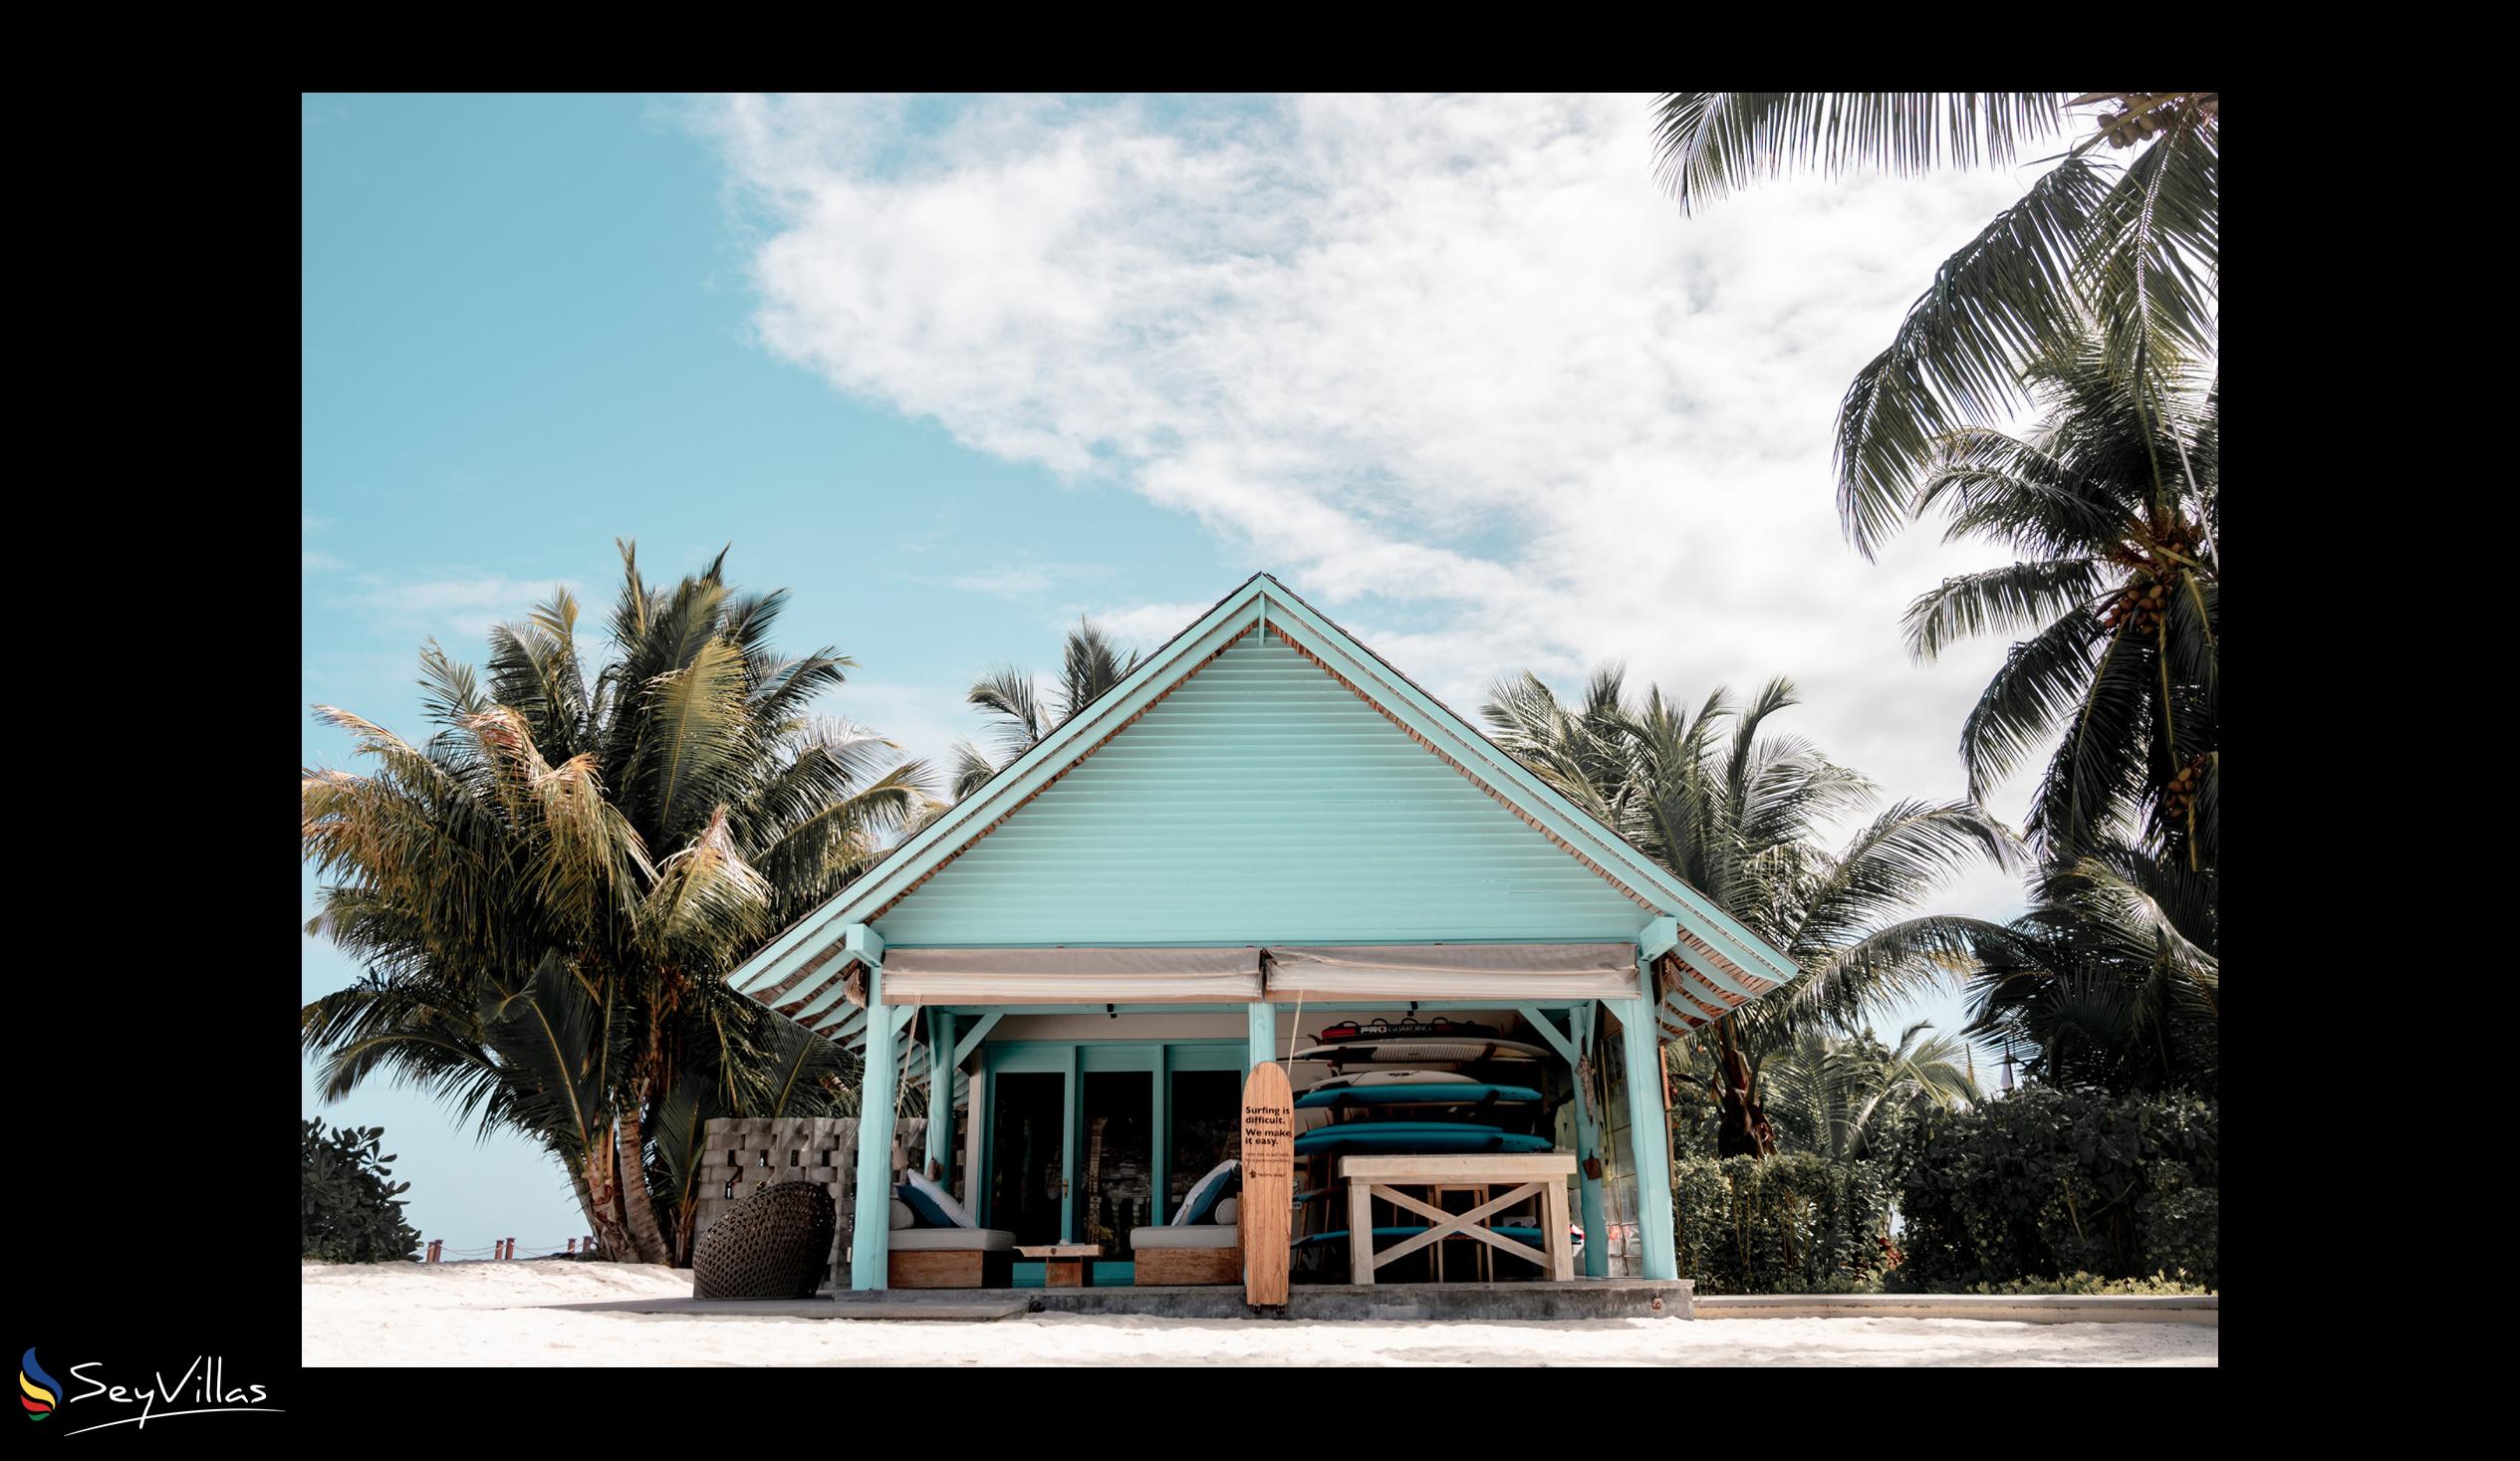 Foto 12: Four Seasons Resort Desroches Island - Aussenbereich - Desroches Island (Seychellen)